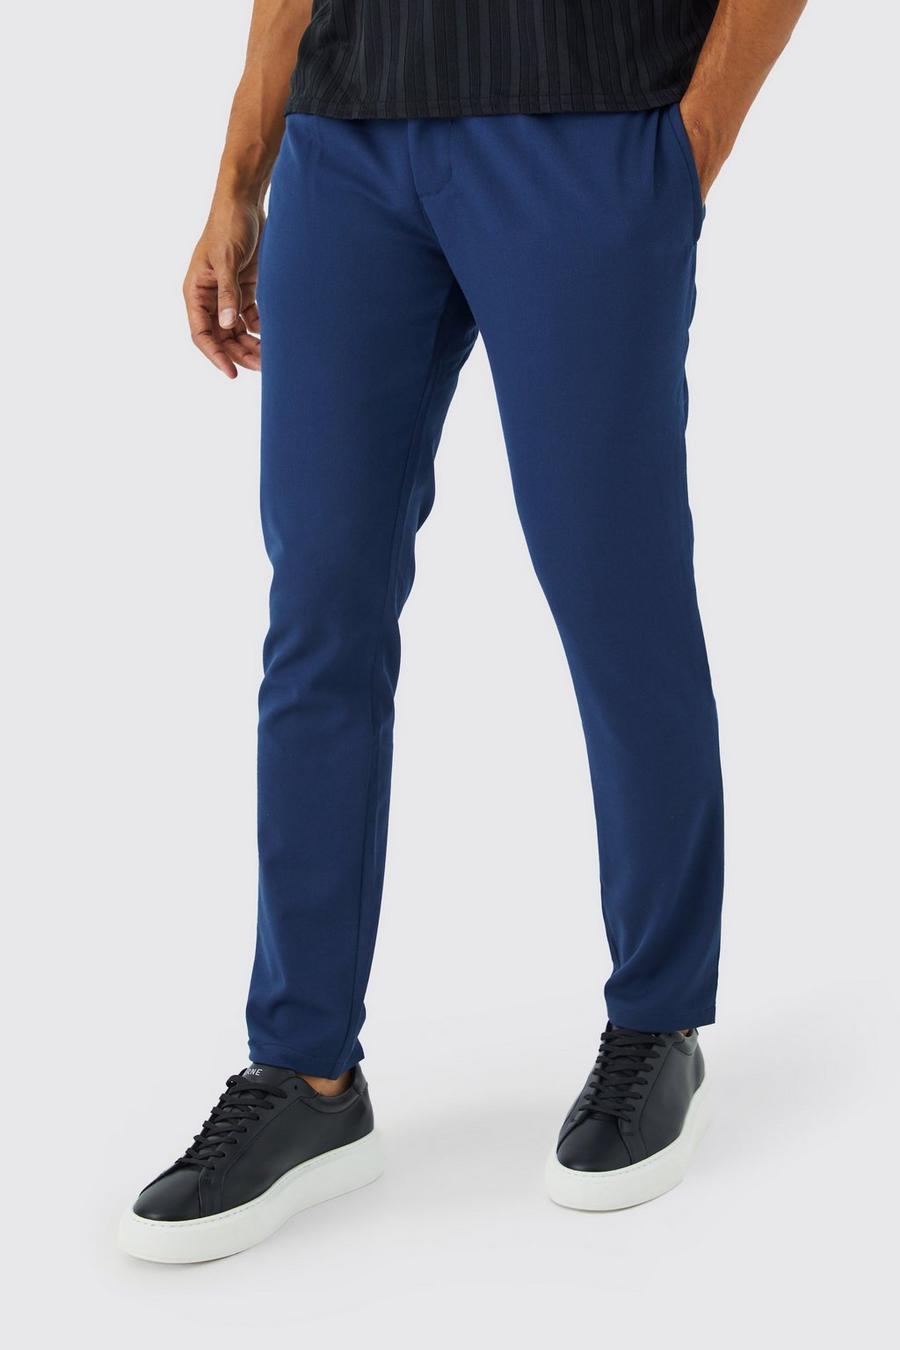 Pantalón ajustado cómodo con cordón elástico, Navy azul marino